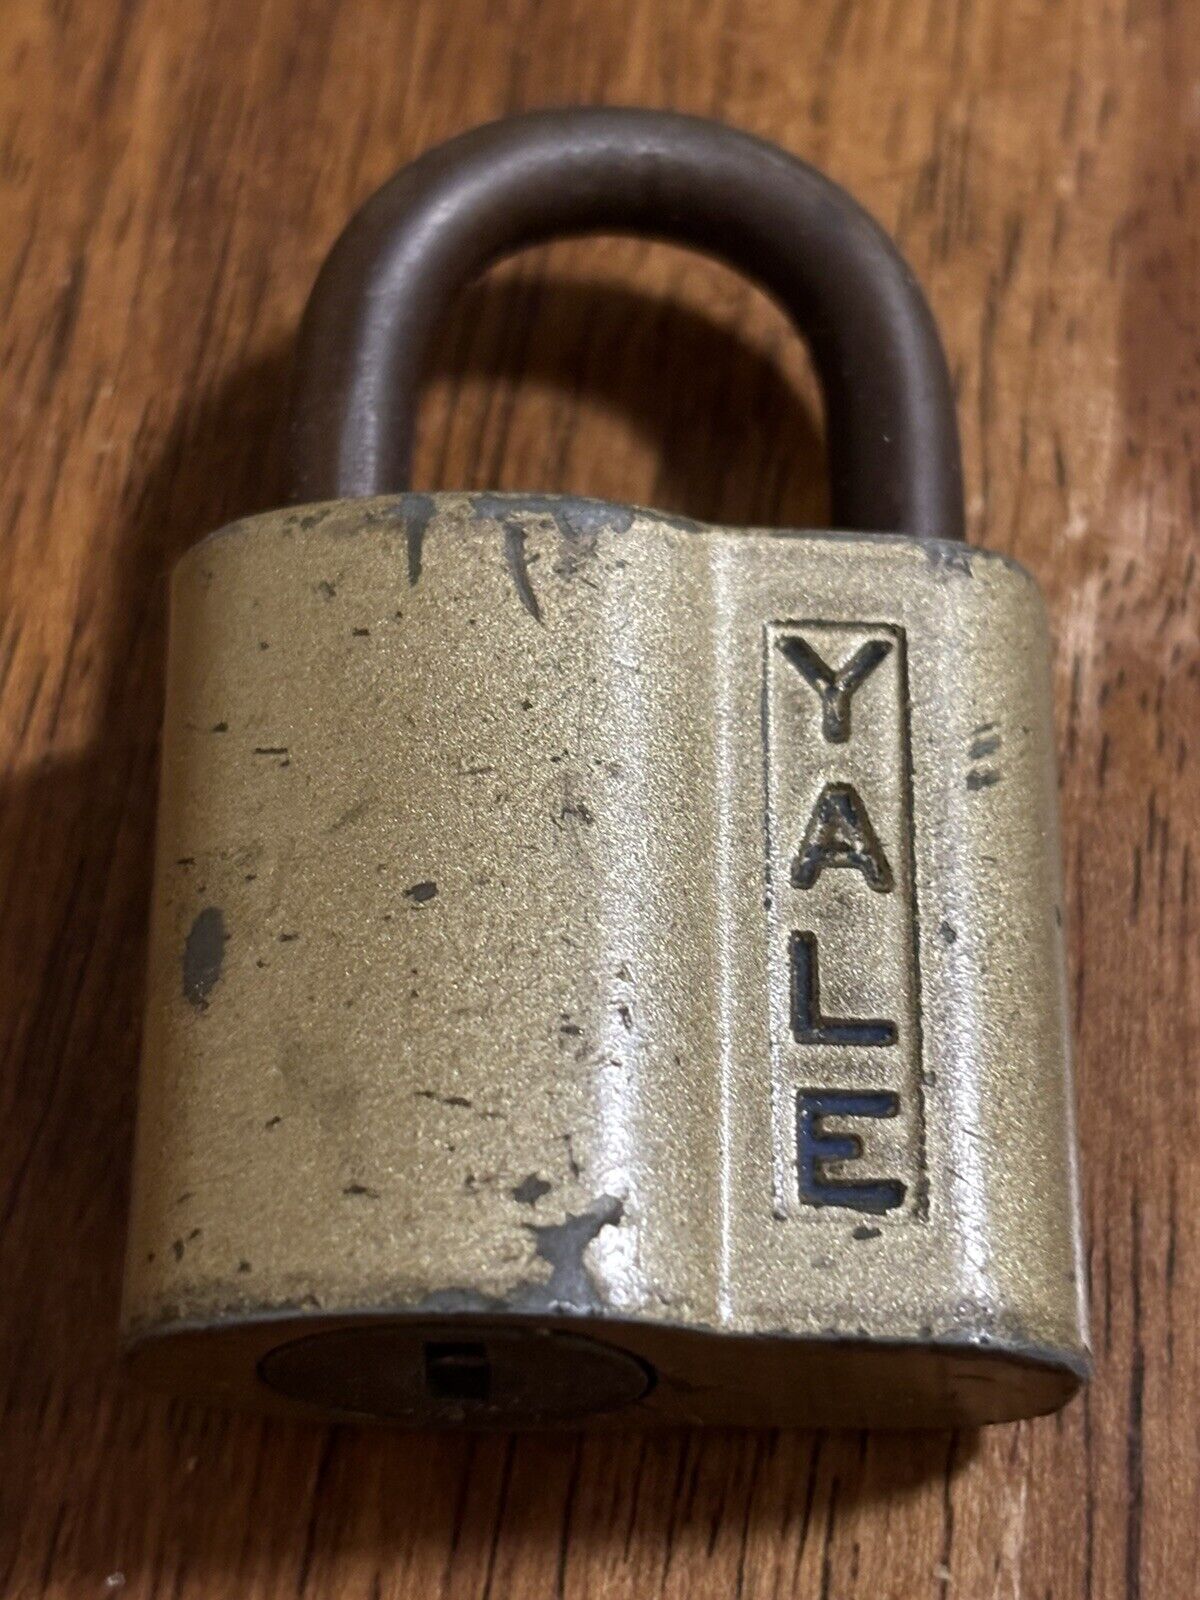 LOT OF 3 ASSORTED Brass & Steel Locks, Yale, Master, & Slaymaker. TWO WITH KEYS